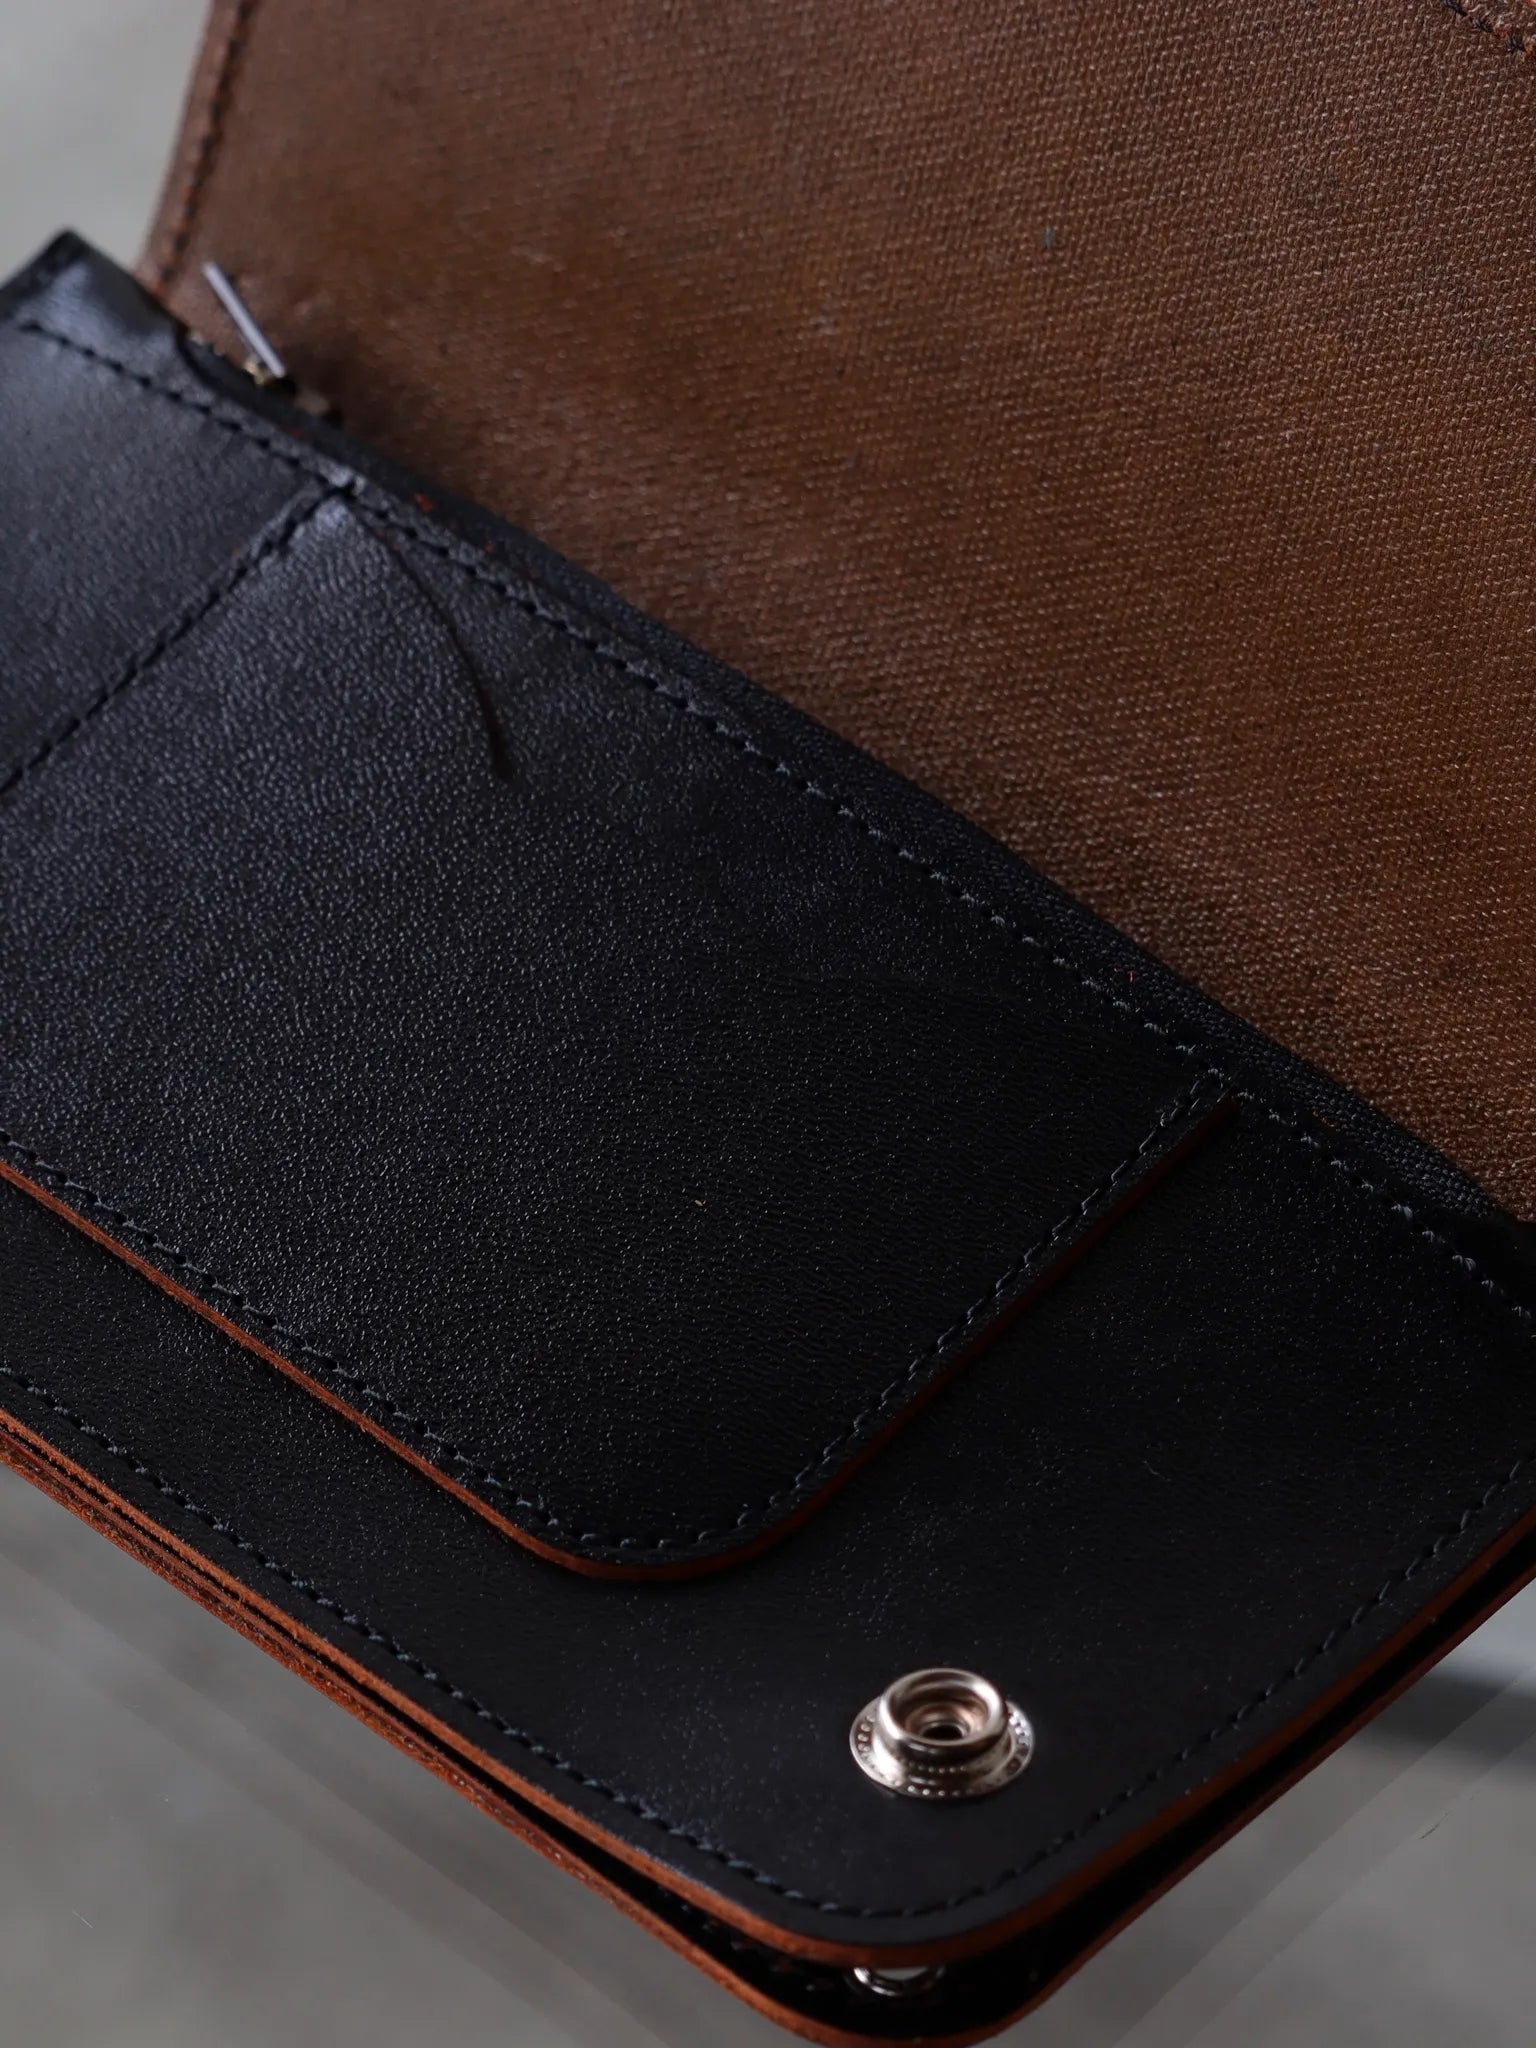 midorikawa-leather-wallet-black-3